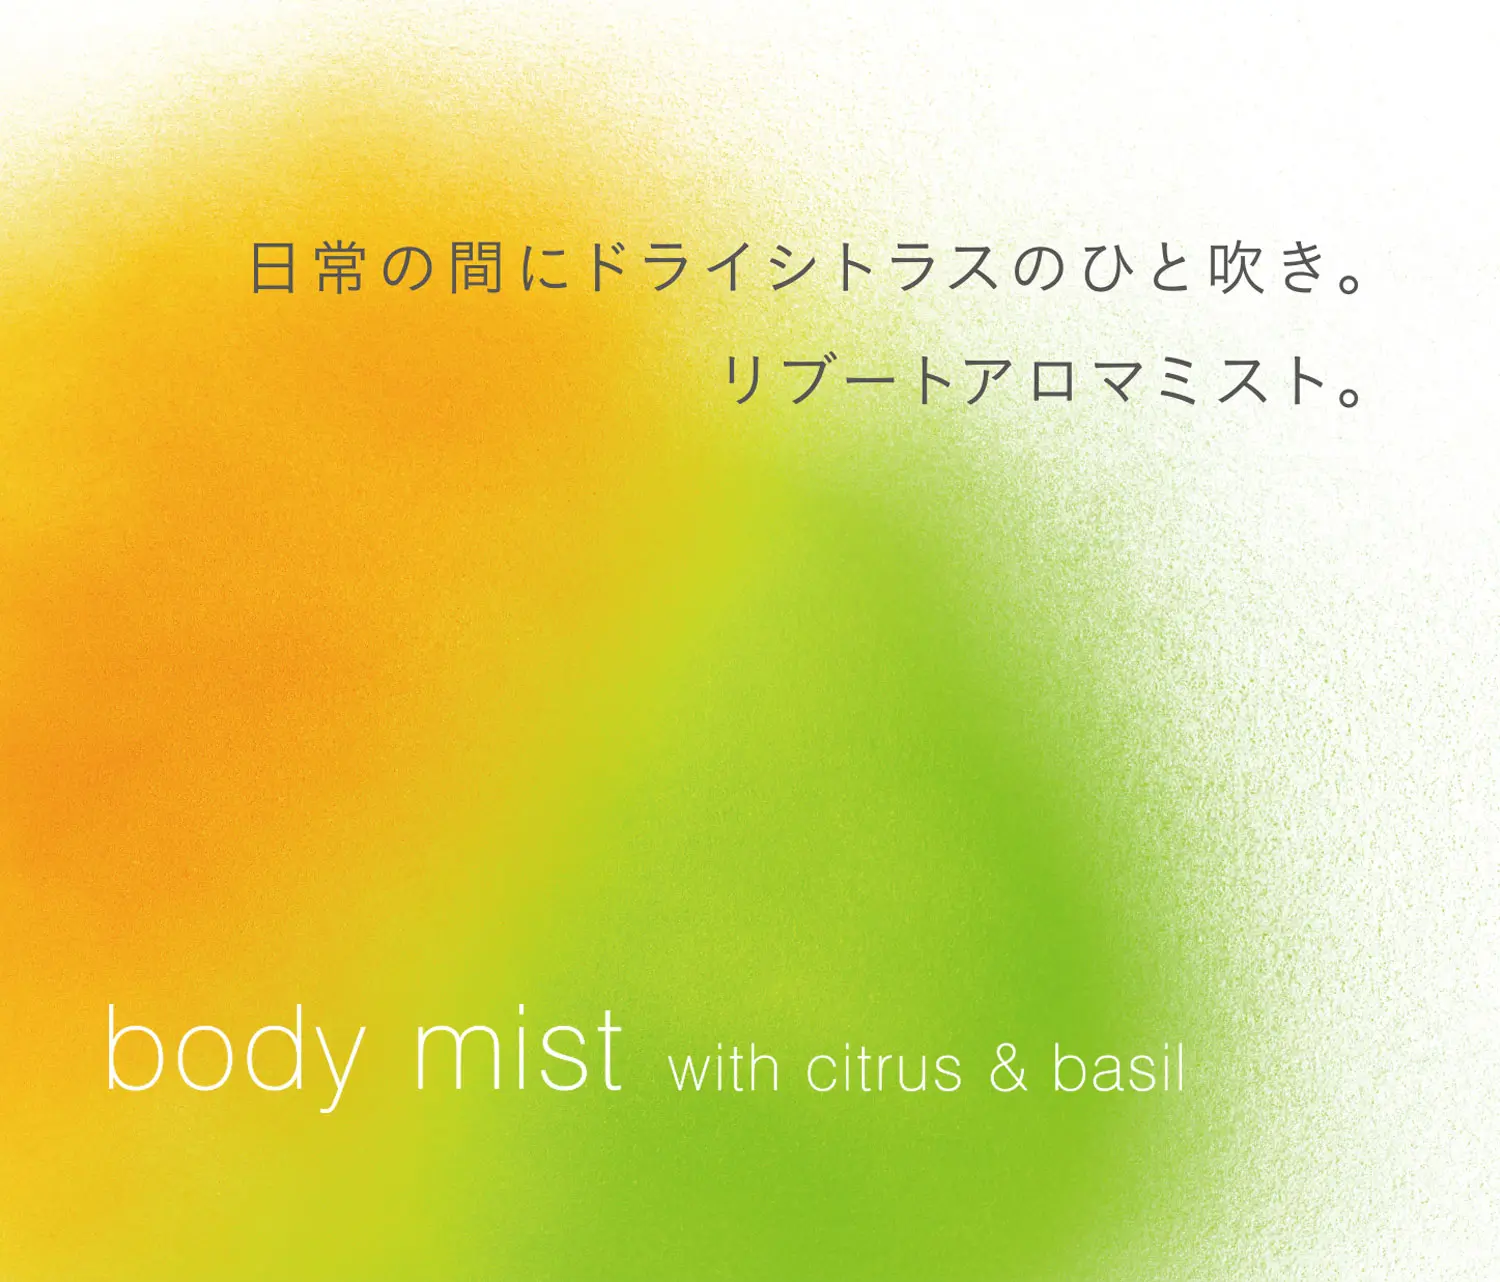 NEW body mist with citrus & basil